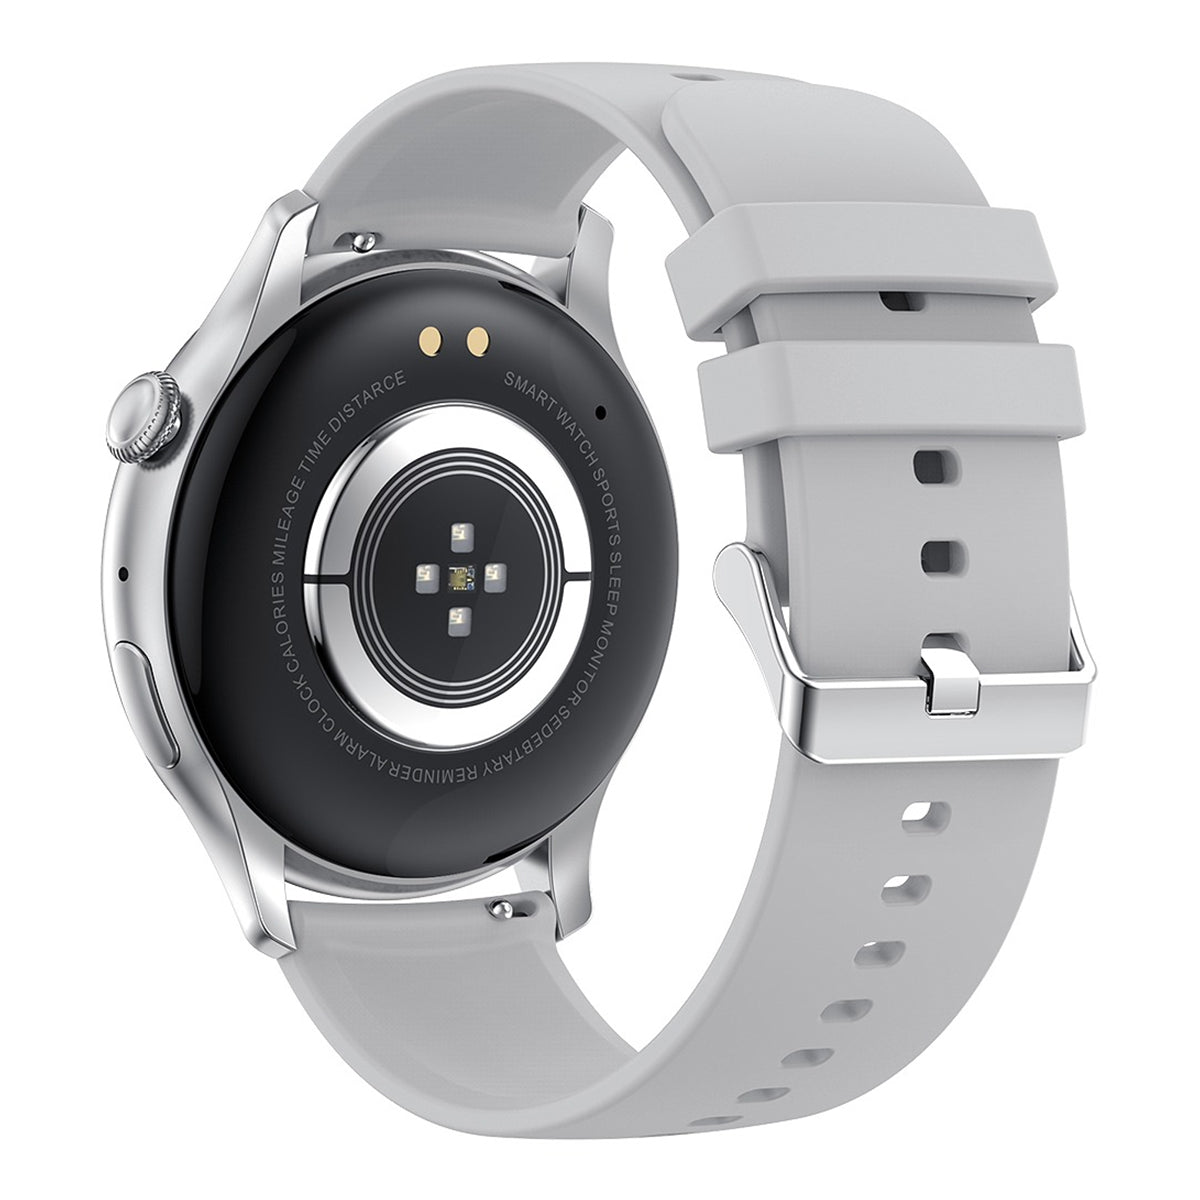 Reloj Smartwatch Hk85 Fralugio Full Touch 1.43´ Notificacion